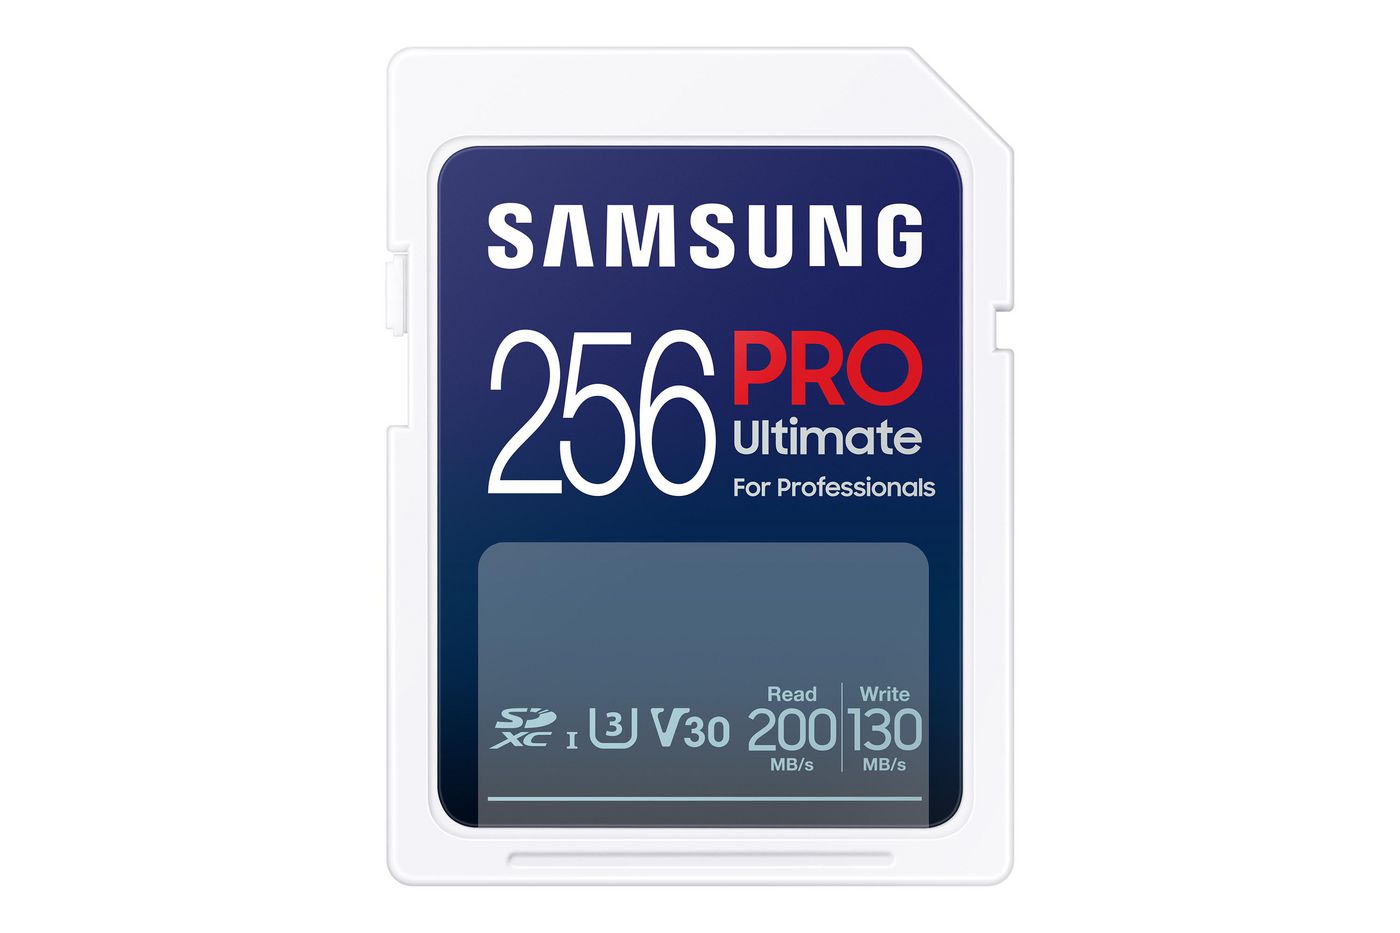 SAMSUNG SD PRO Ultimate 256GB